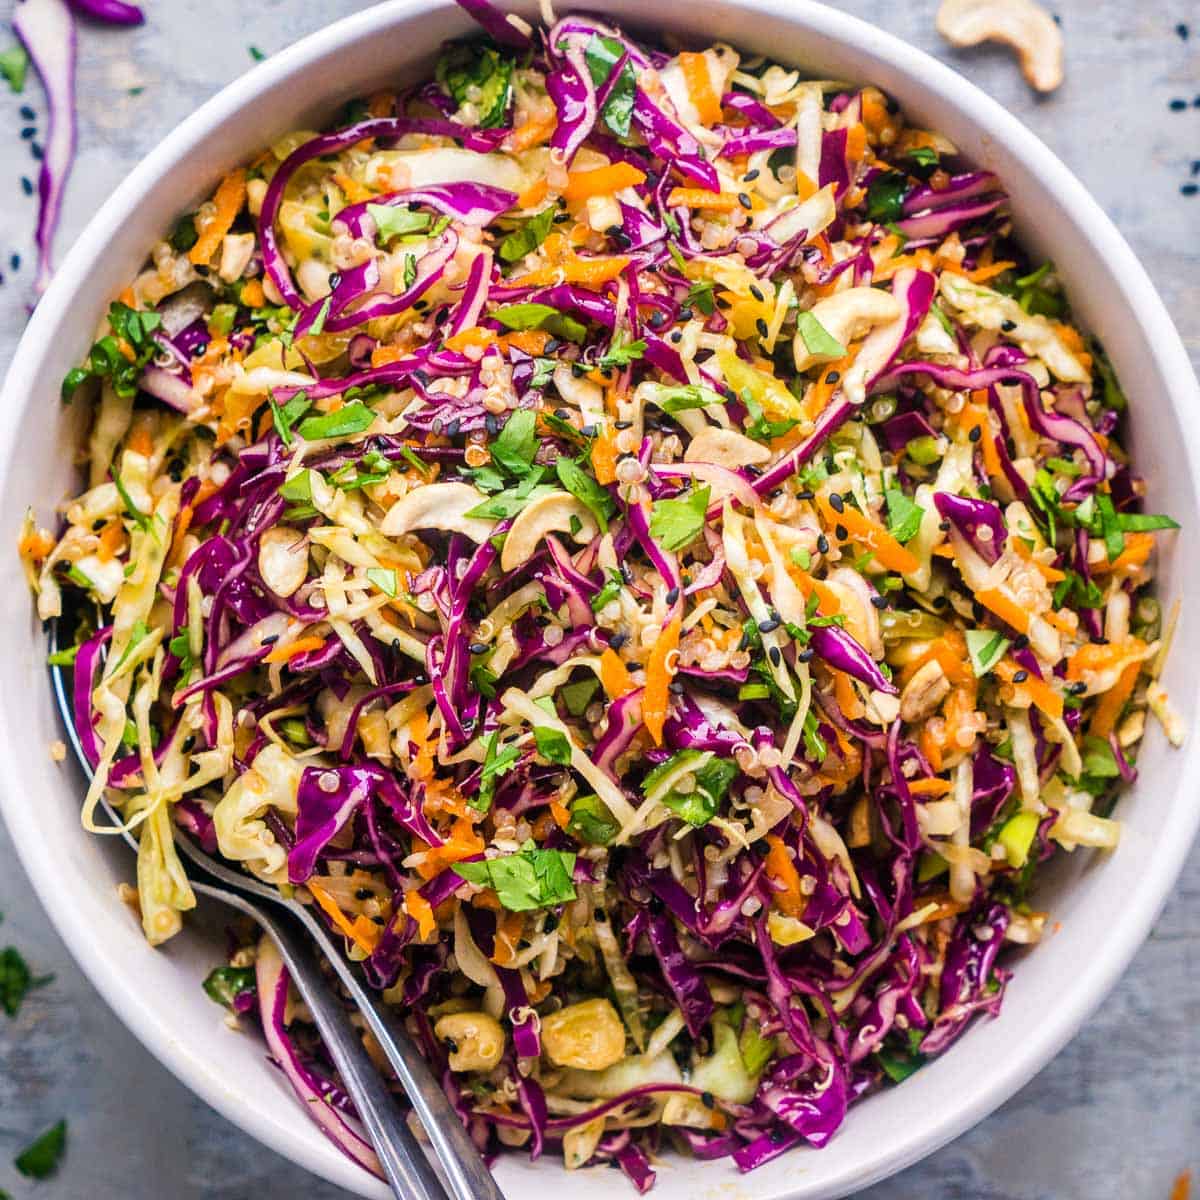 Ordinere uren tidligere Easy Asian Slaw Recipe (Asian Cabbage Salad) - The Kitchen Girl